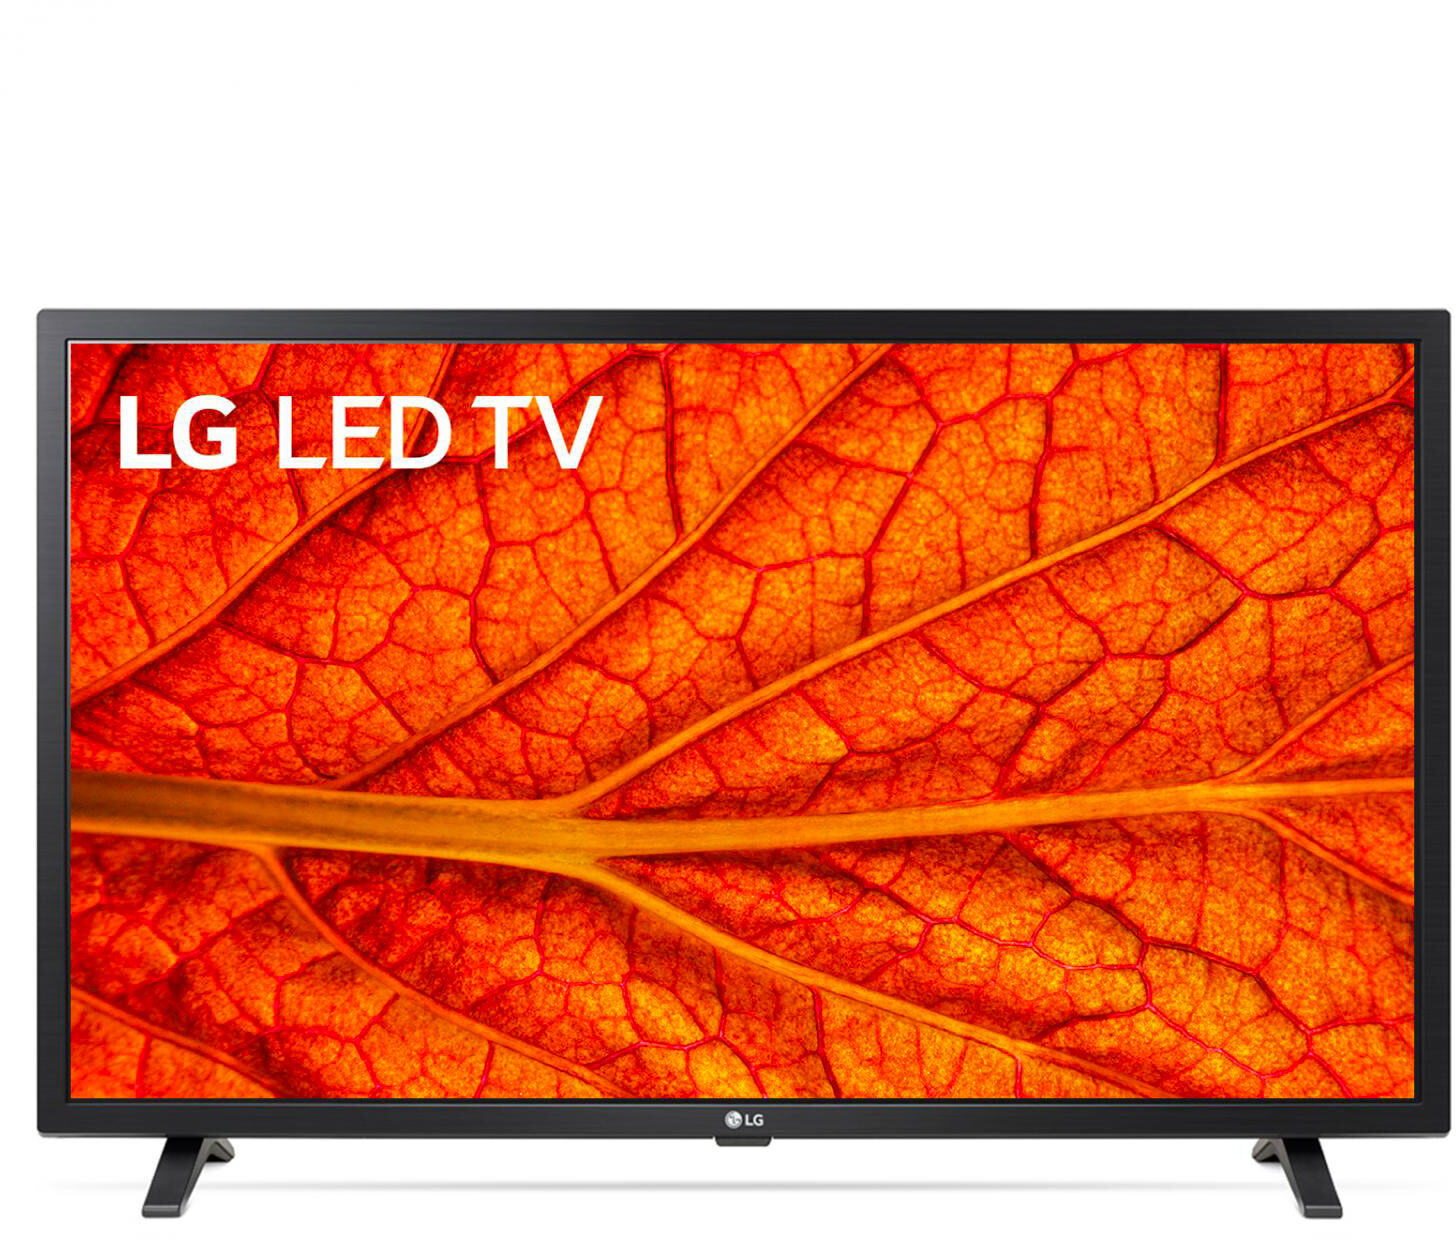 LG 32lm6370pla Smart Tv 32 Pollici Full Hd Televisore Led Display Led Dvb T2 /s2 Internet Tv Wifi Bluetooth 32lm6370pla